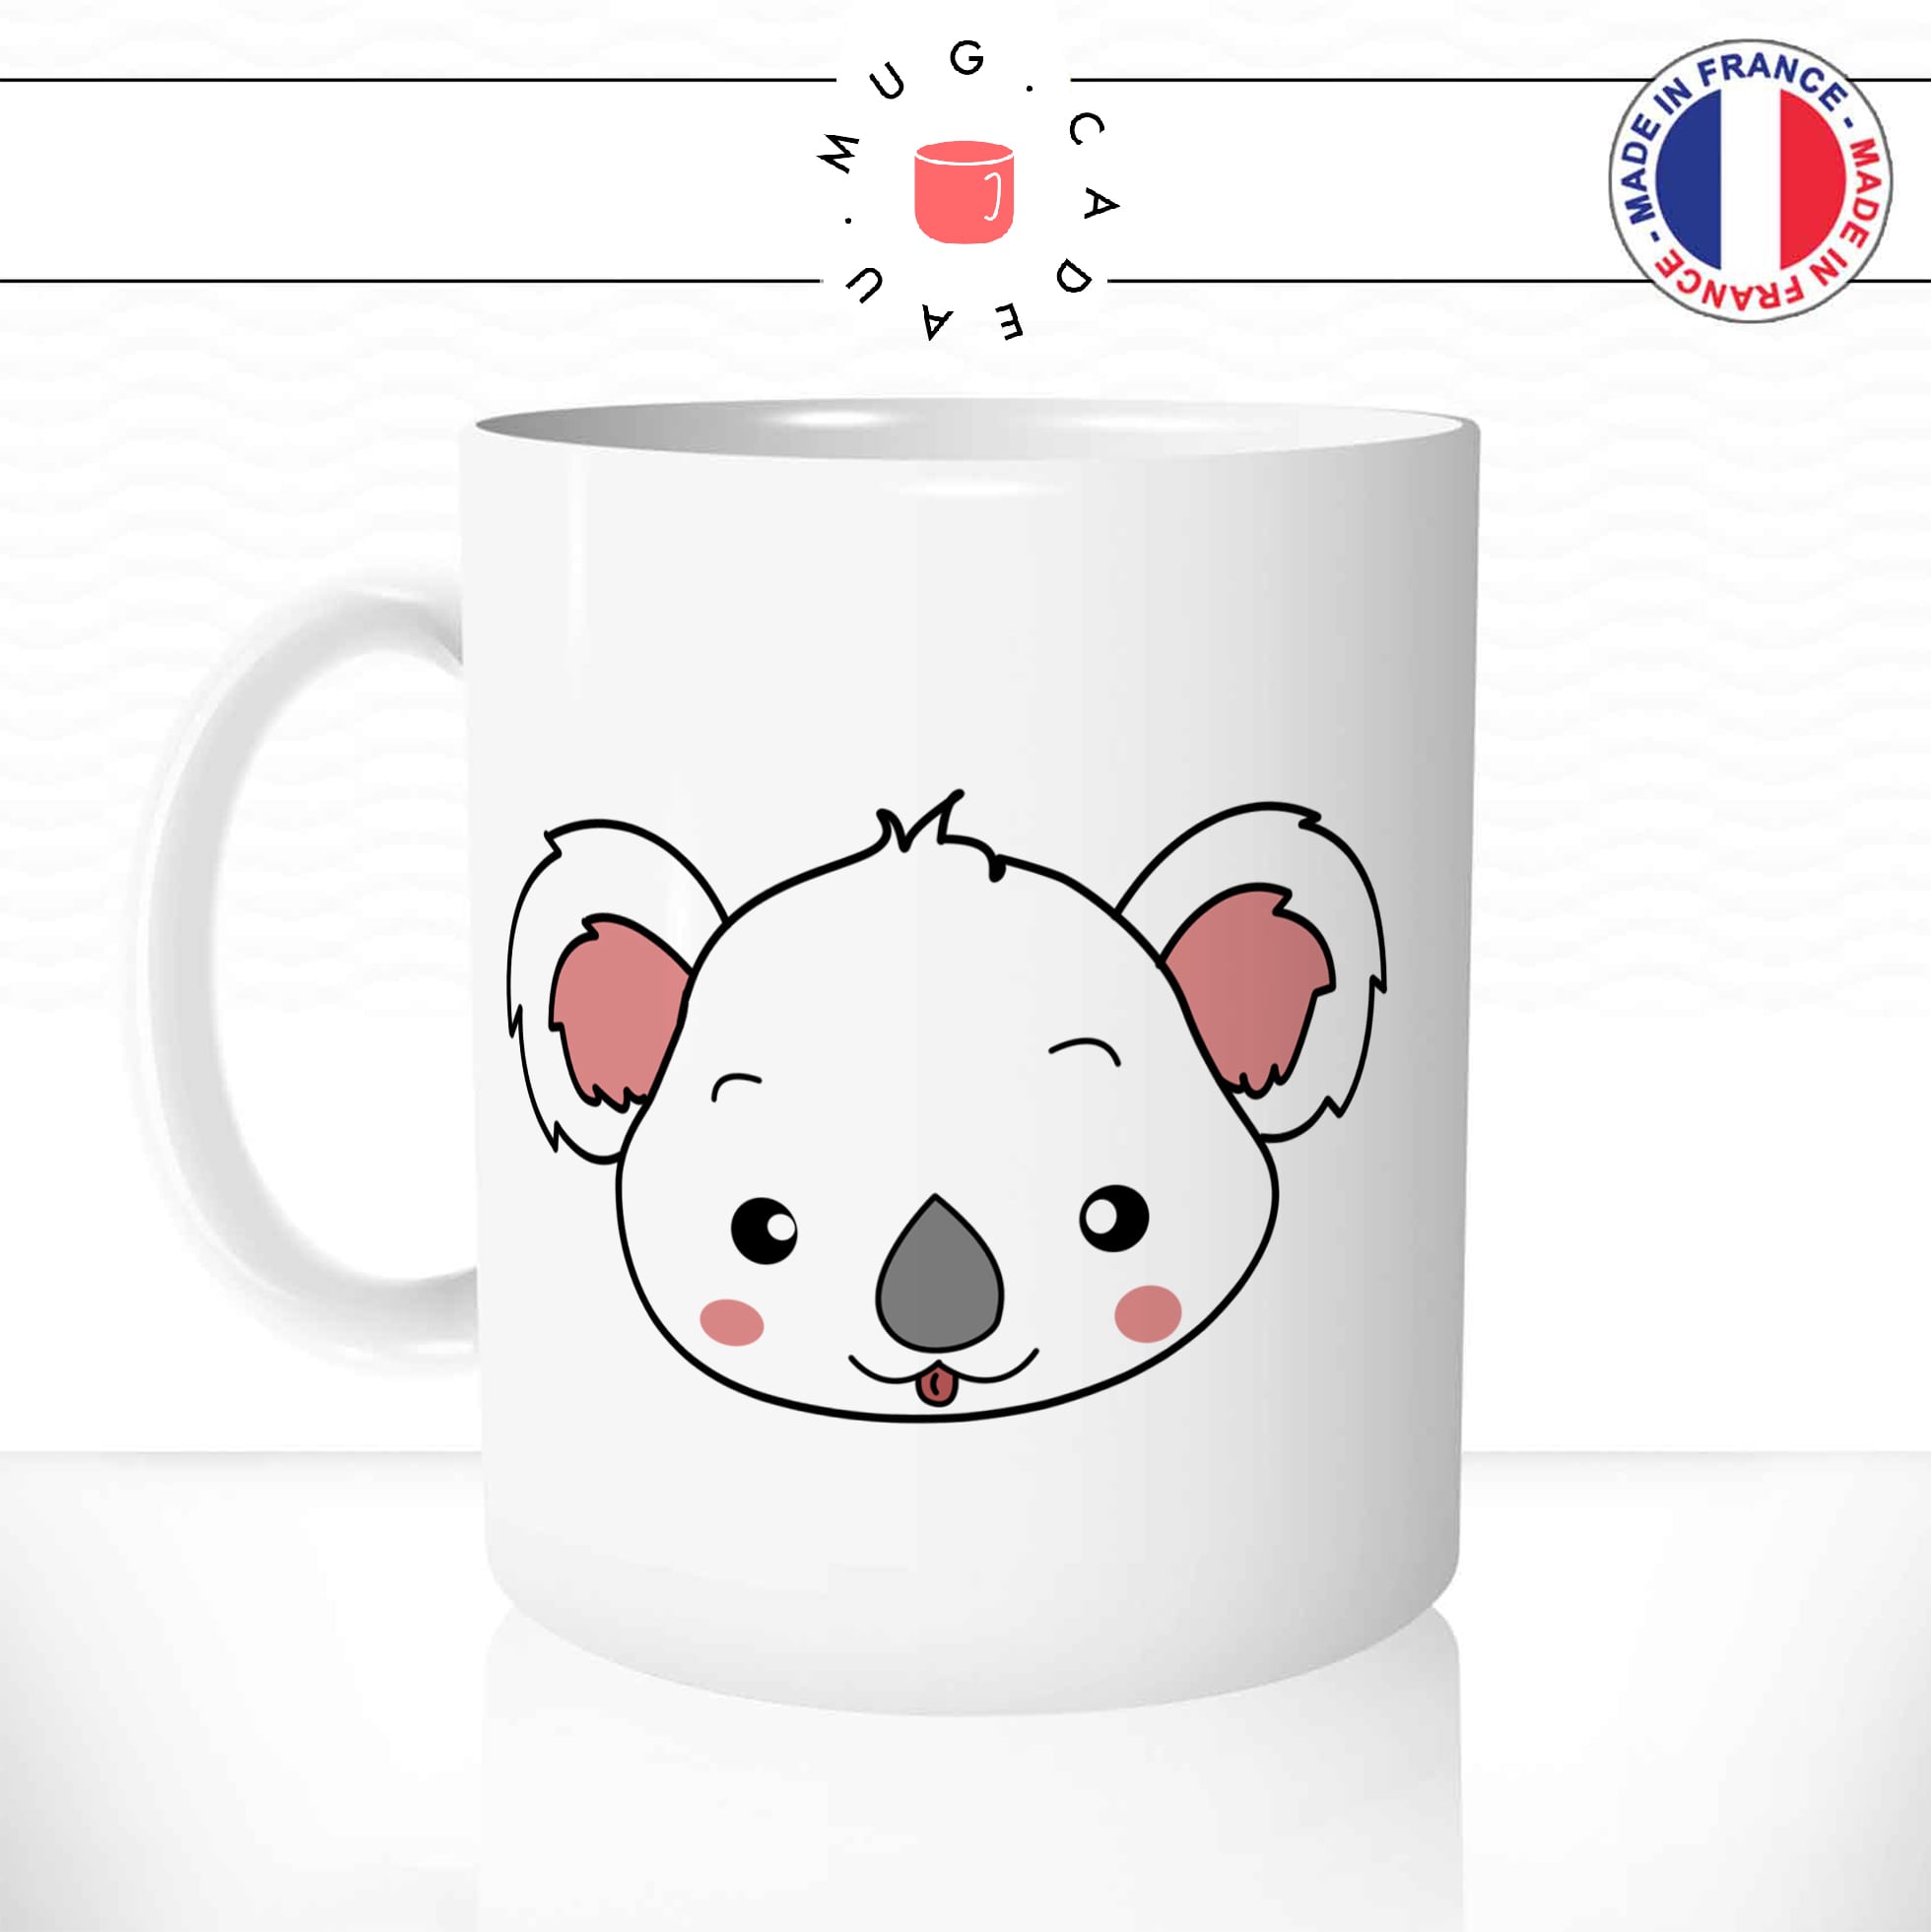 mug-tasse-ref3-koala-blanc-tete-mignon-cafe-the-mugs-tasses-personnalise-anse-gauche-min